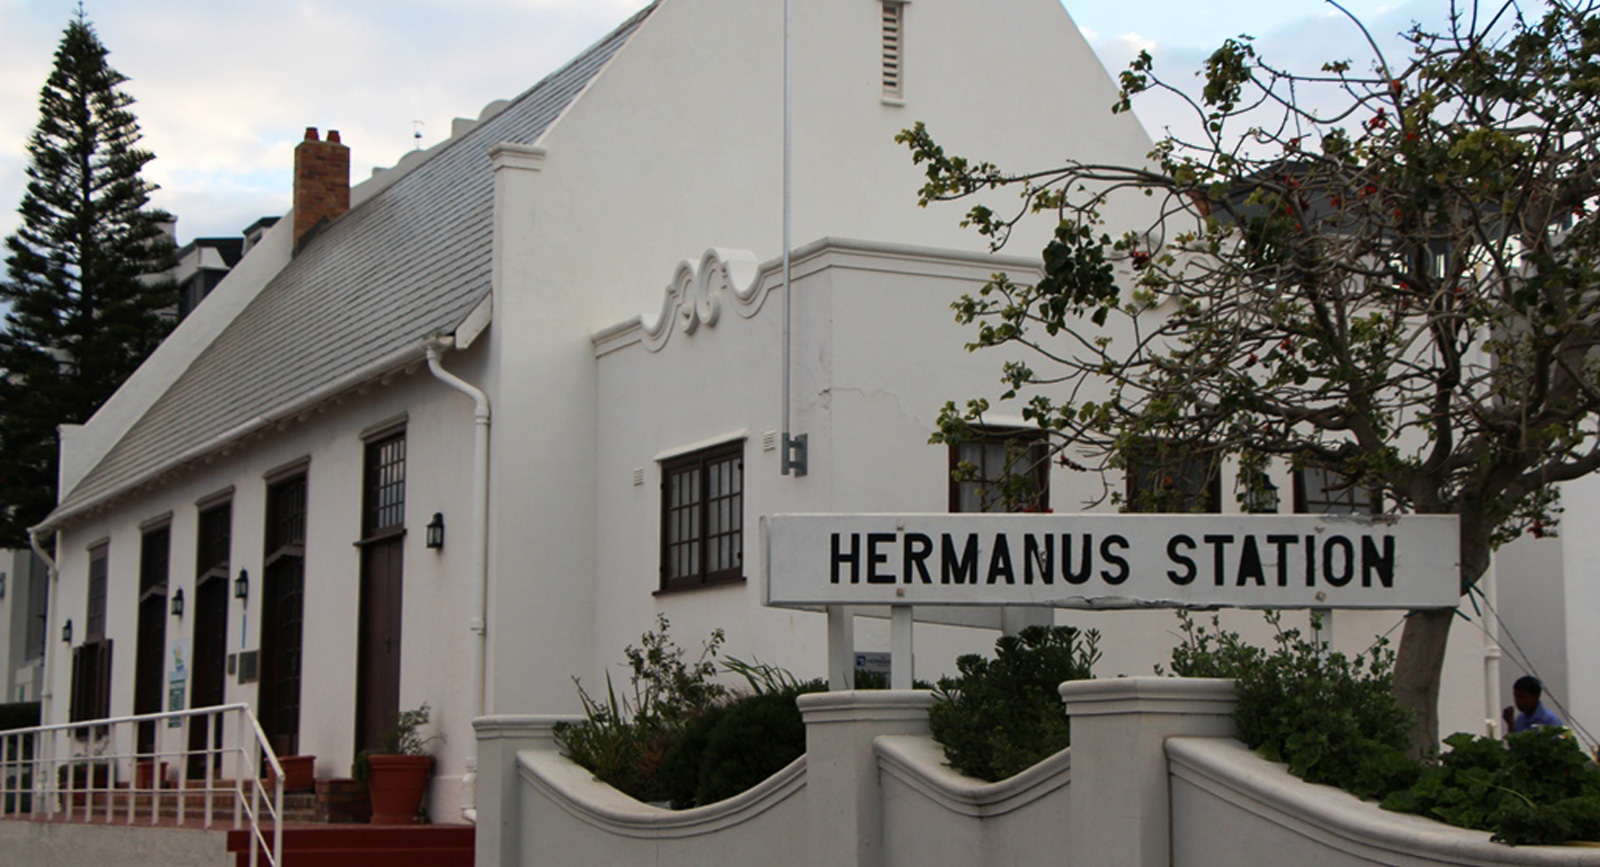 Hermanus Station